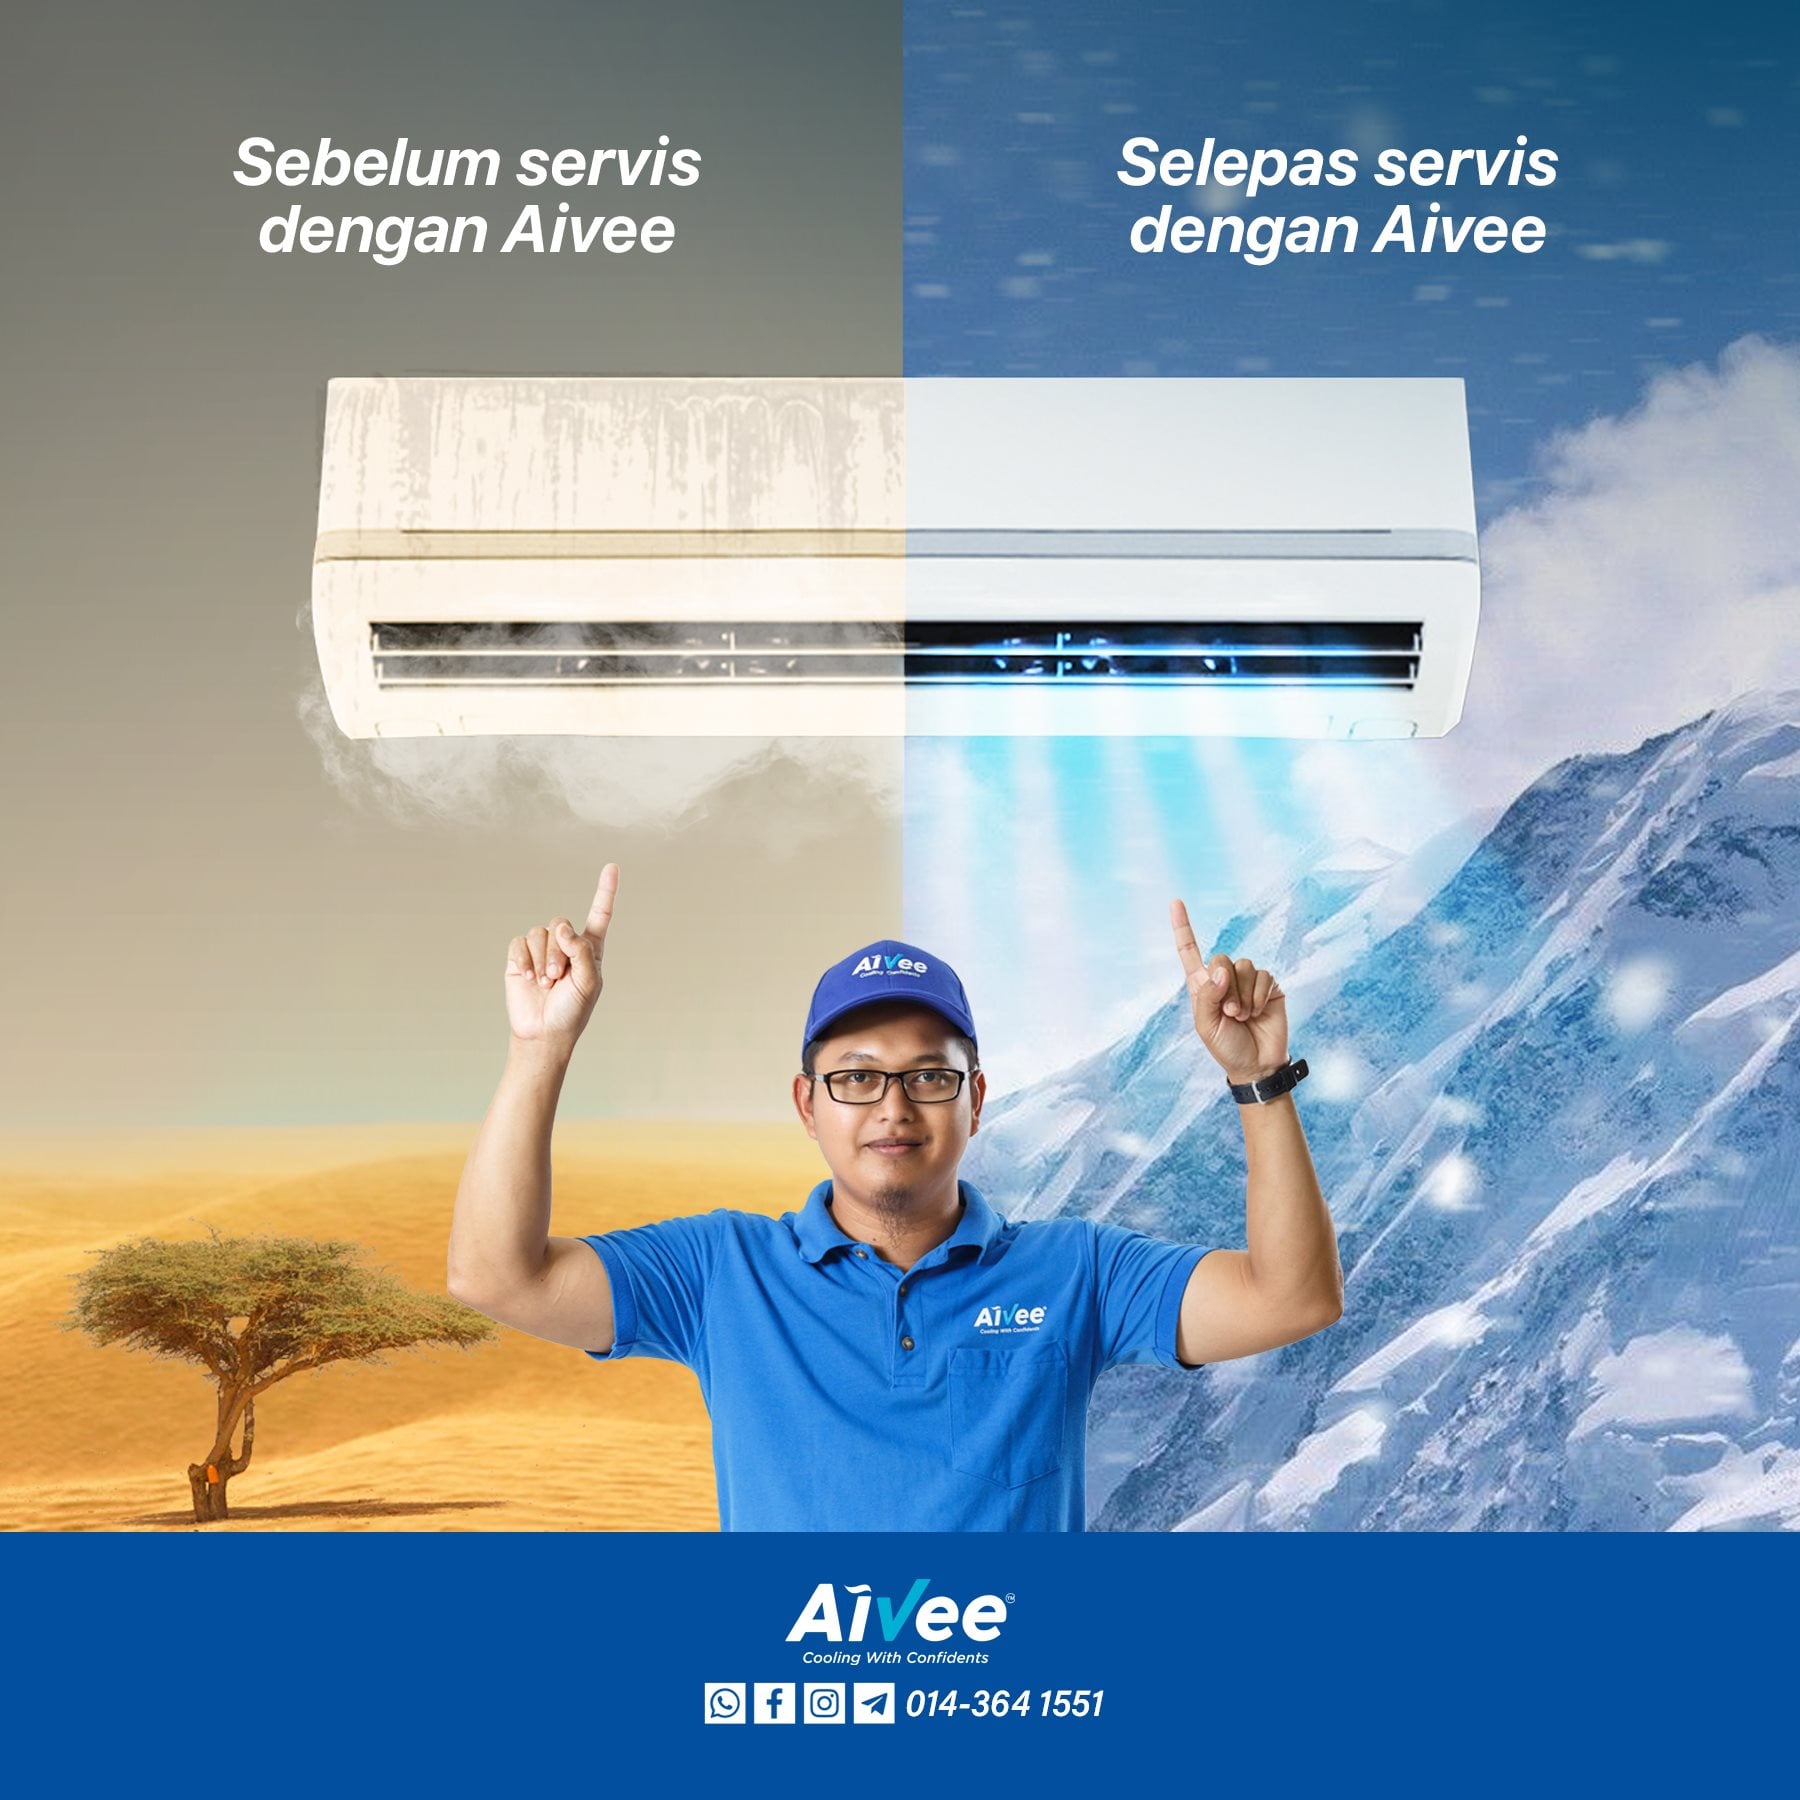 Air Cond (Air Condition) Service in Malaysia. Pakar Servis Penghawa Dingin di Kl & Selangor.